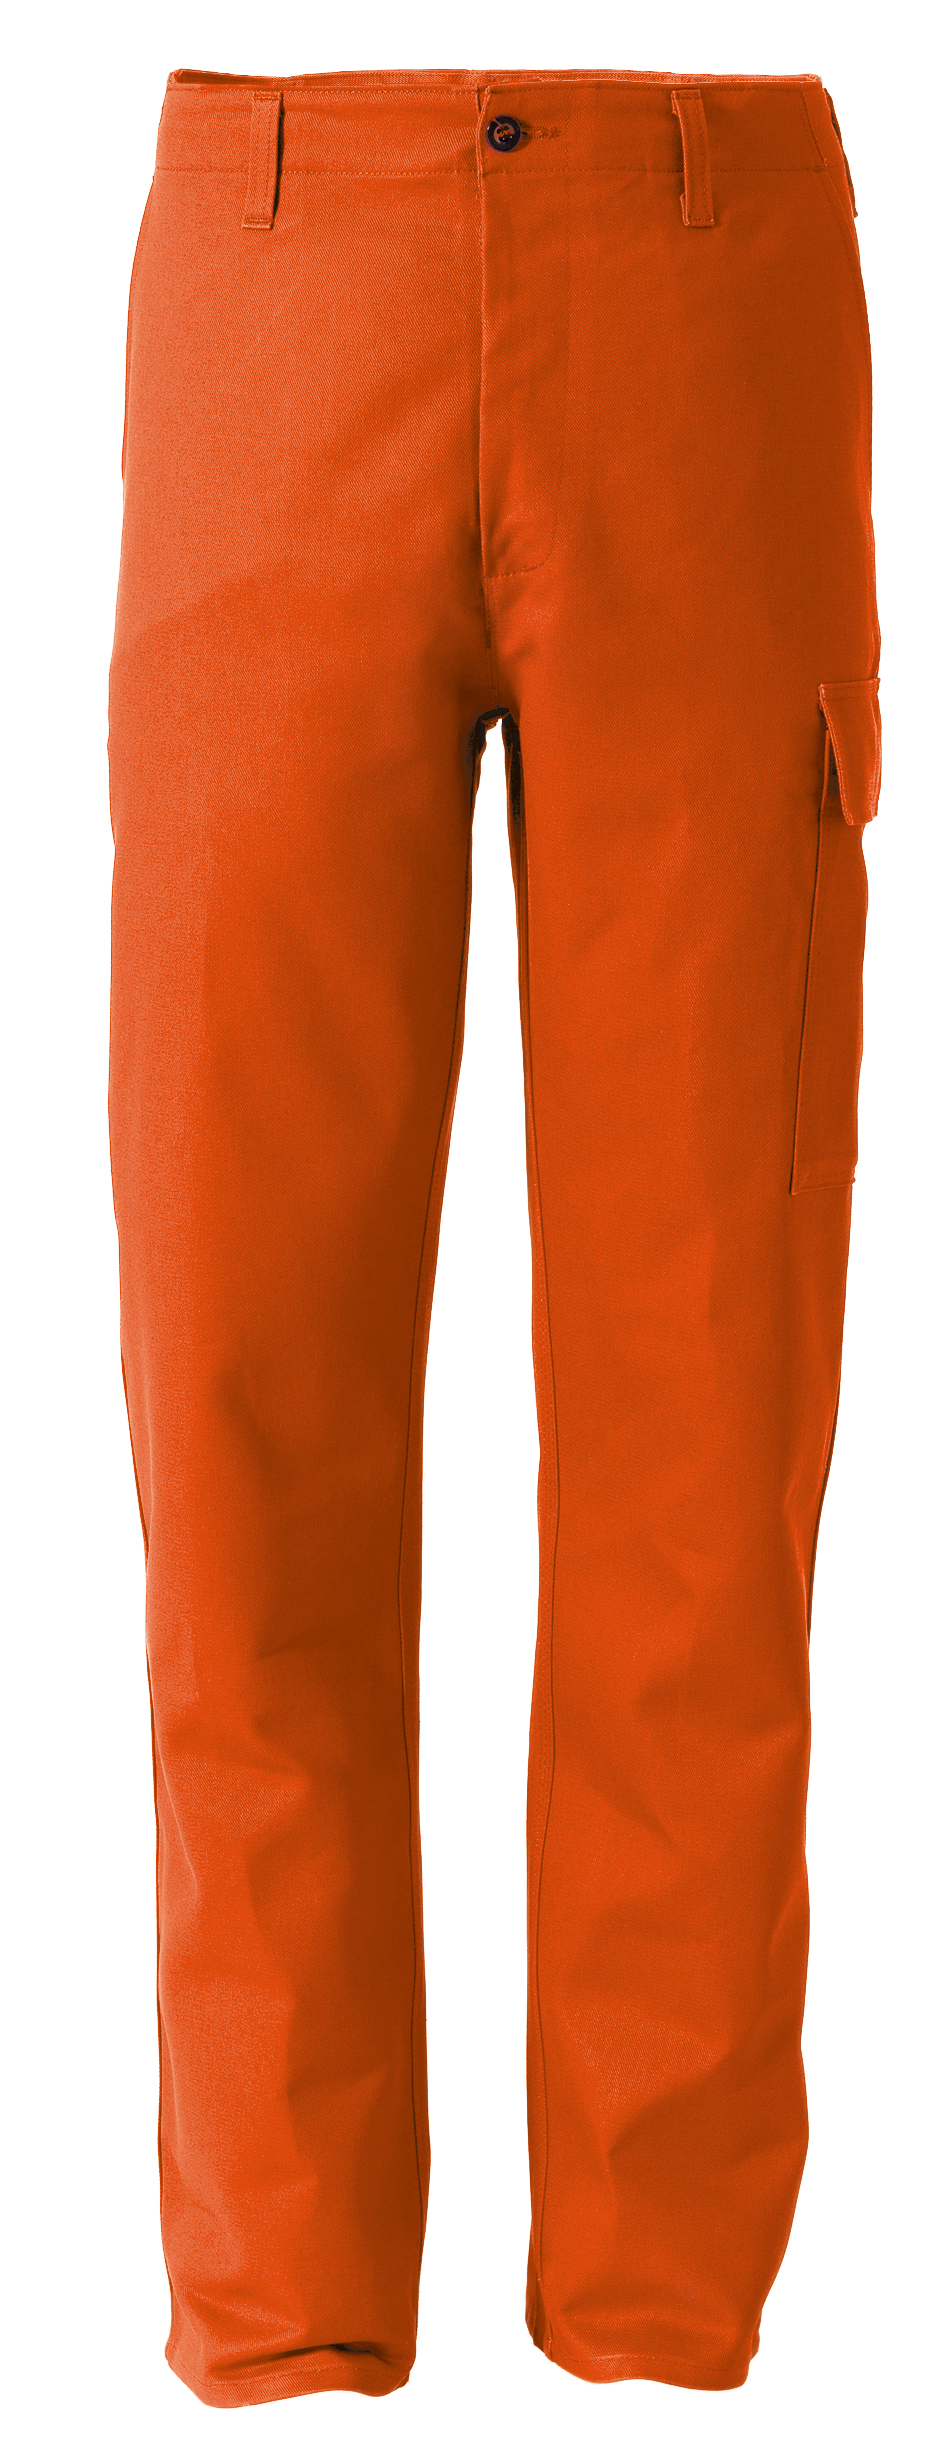 ROFA Bundhose Arbeitshose Berufshose Workerhose Arbeitskleidung Berufskleidung orange ca 330 g